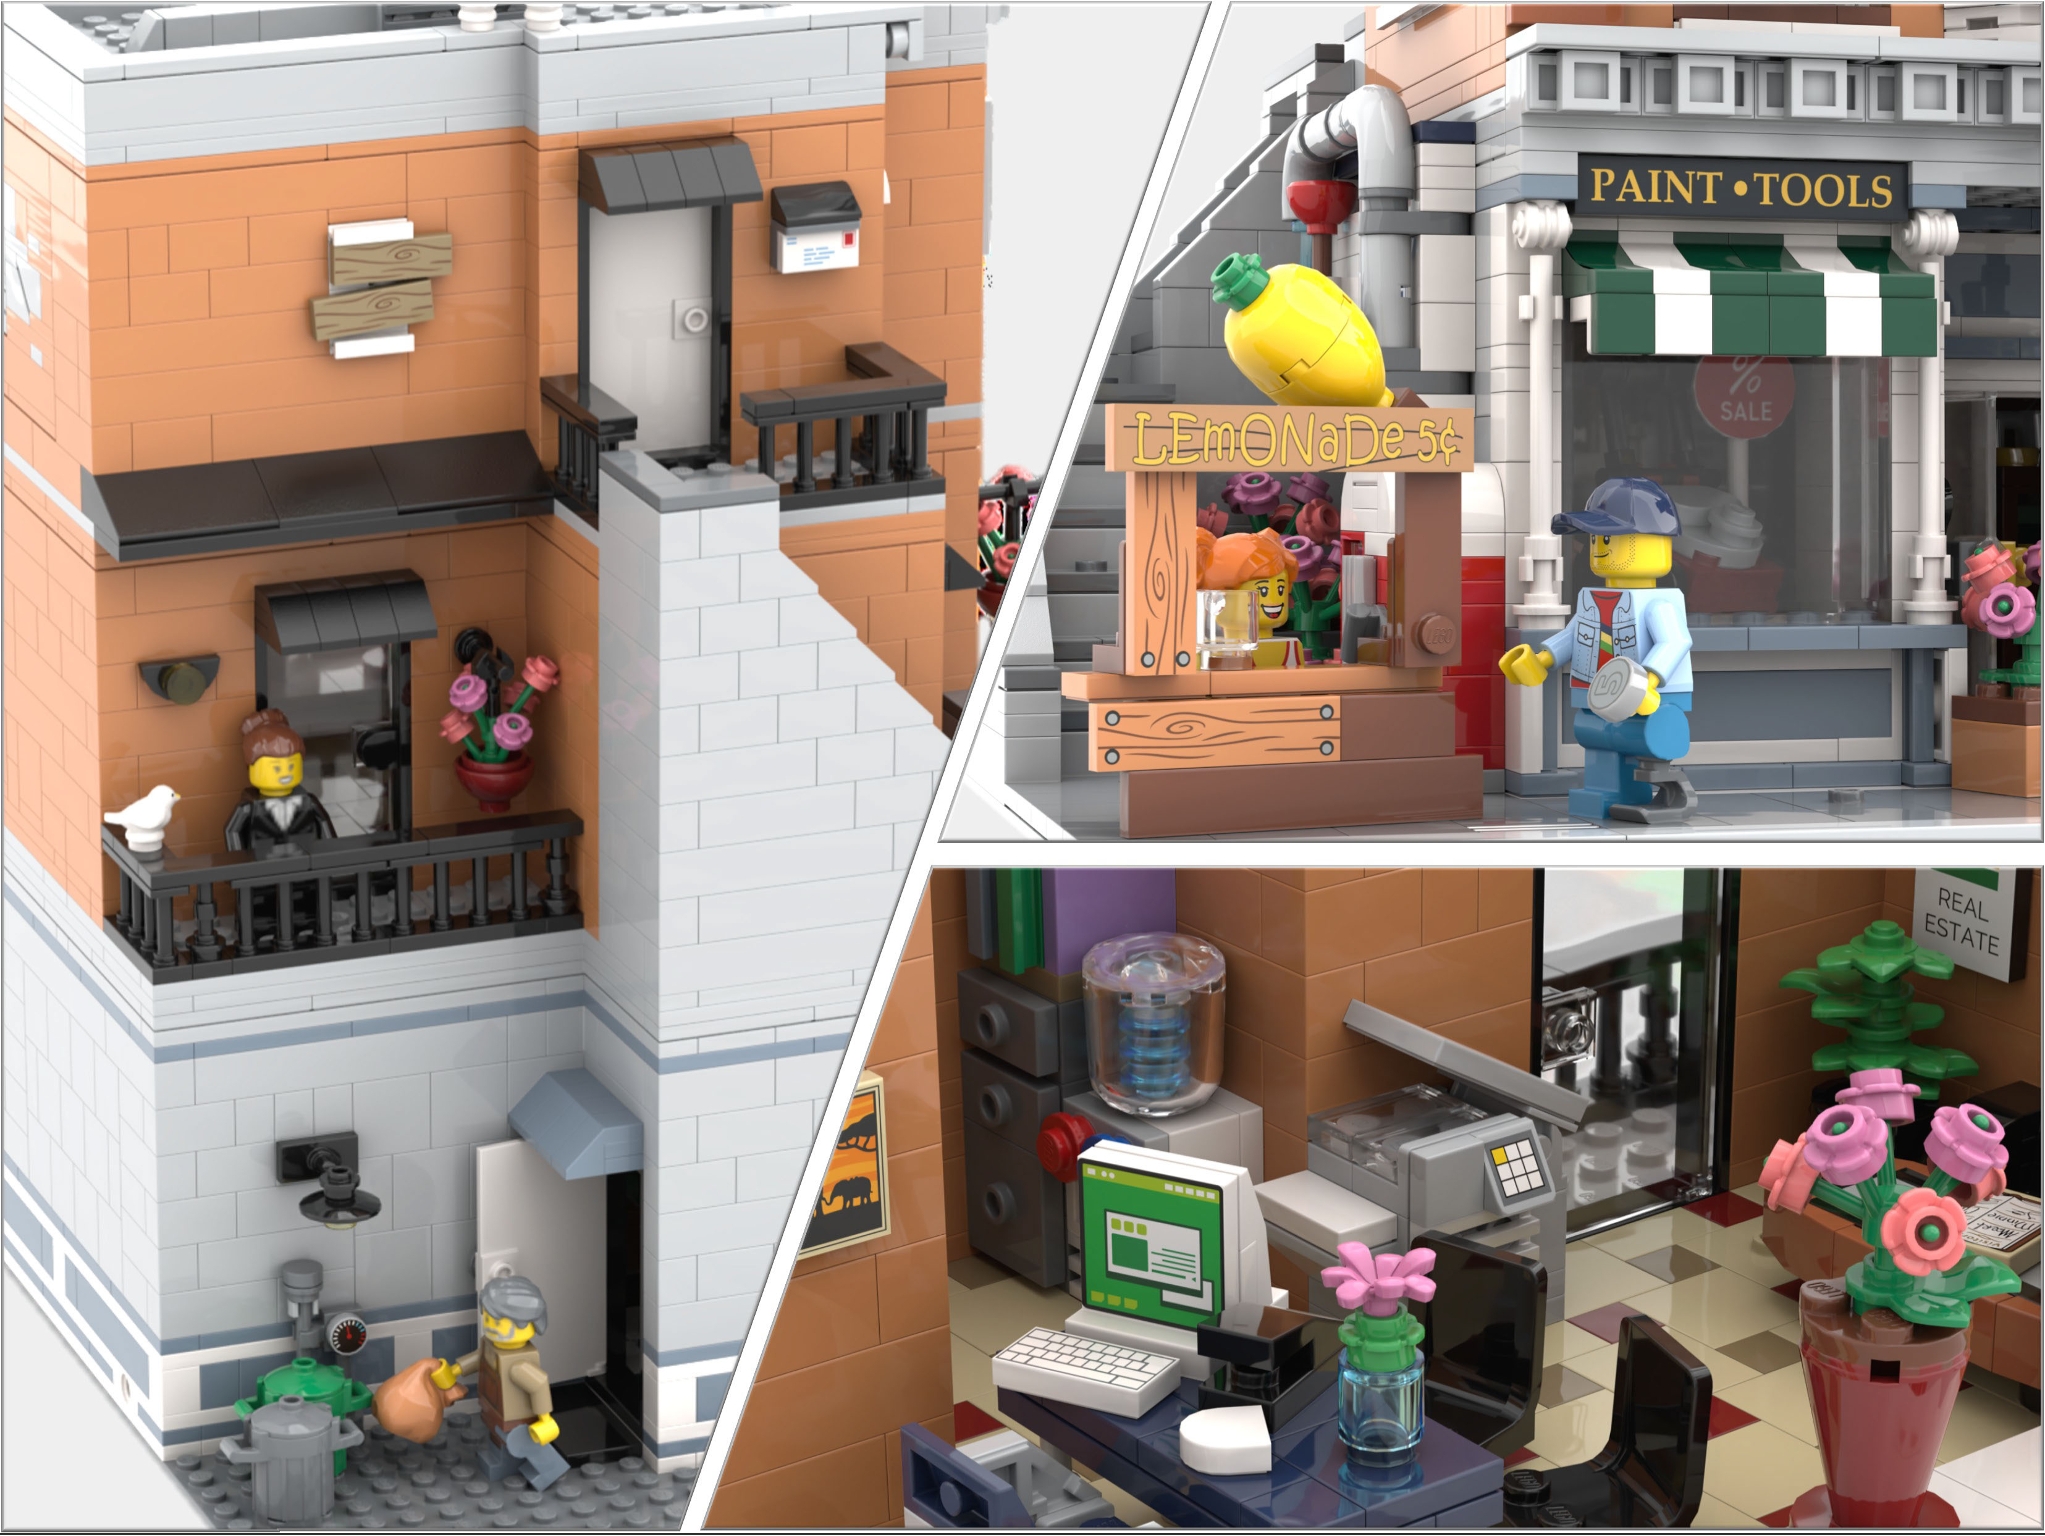 Hardware Store and Apartment [BrickLink]